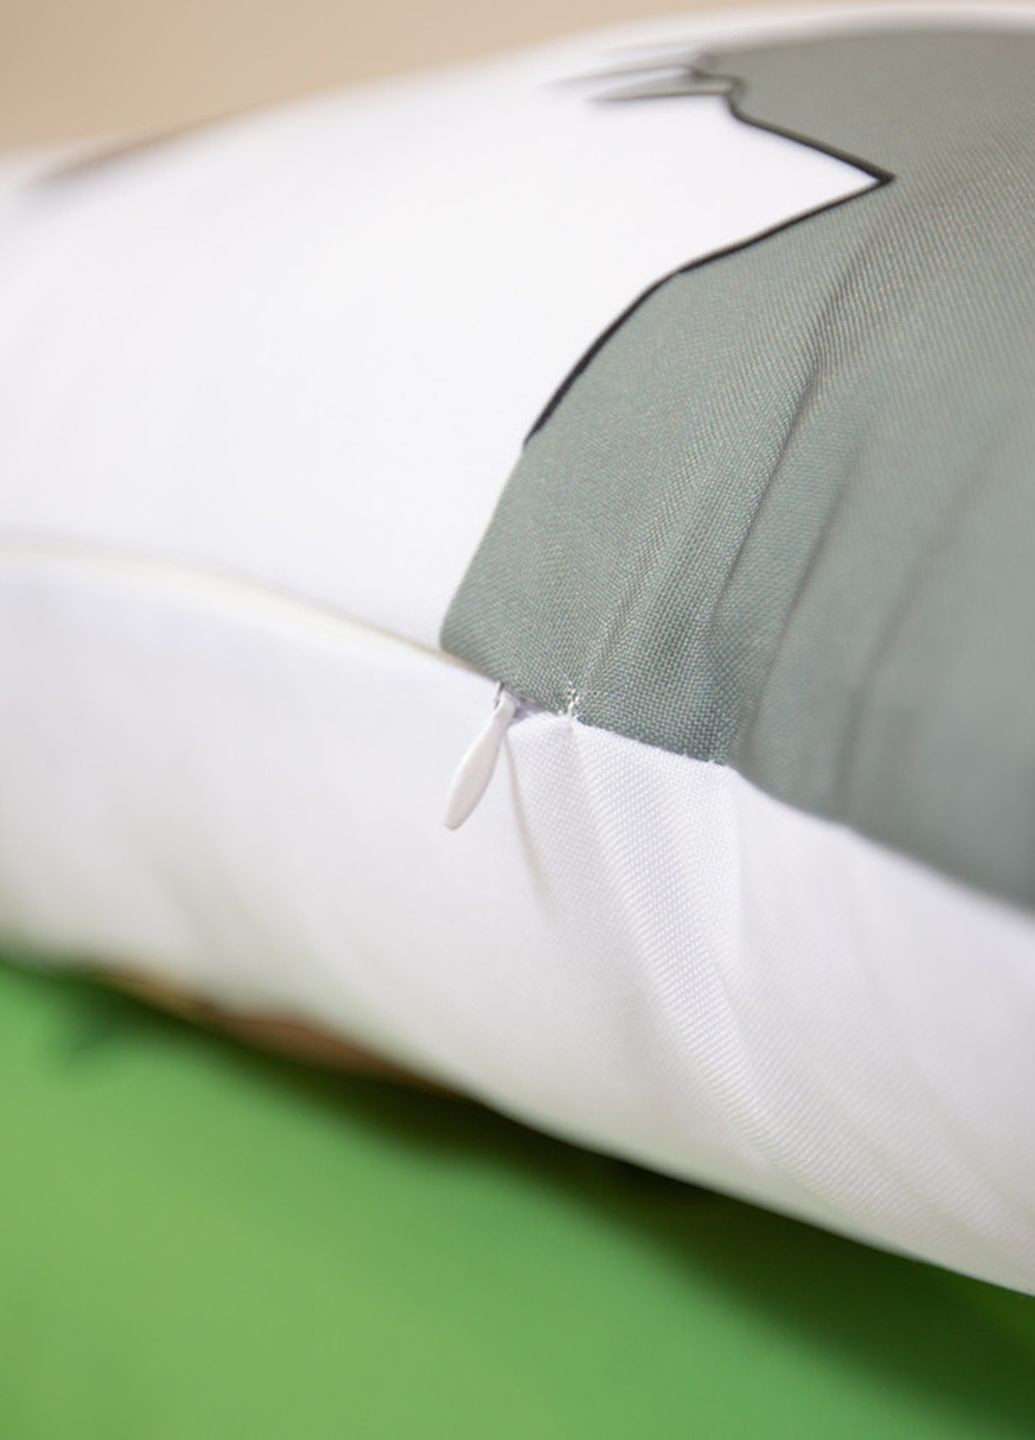 Подушка дакимакура Аль-Хайтам Геншин декоративная подушка для обнимания двухсторонняя 60*200 No Brand (260954455)